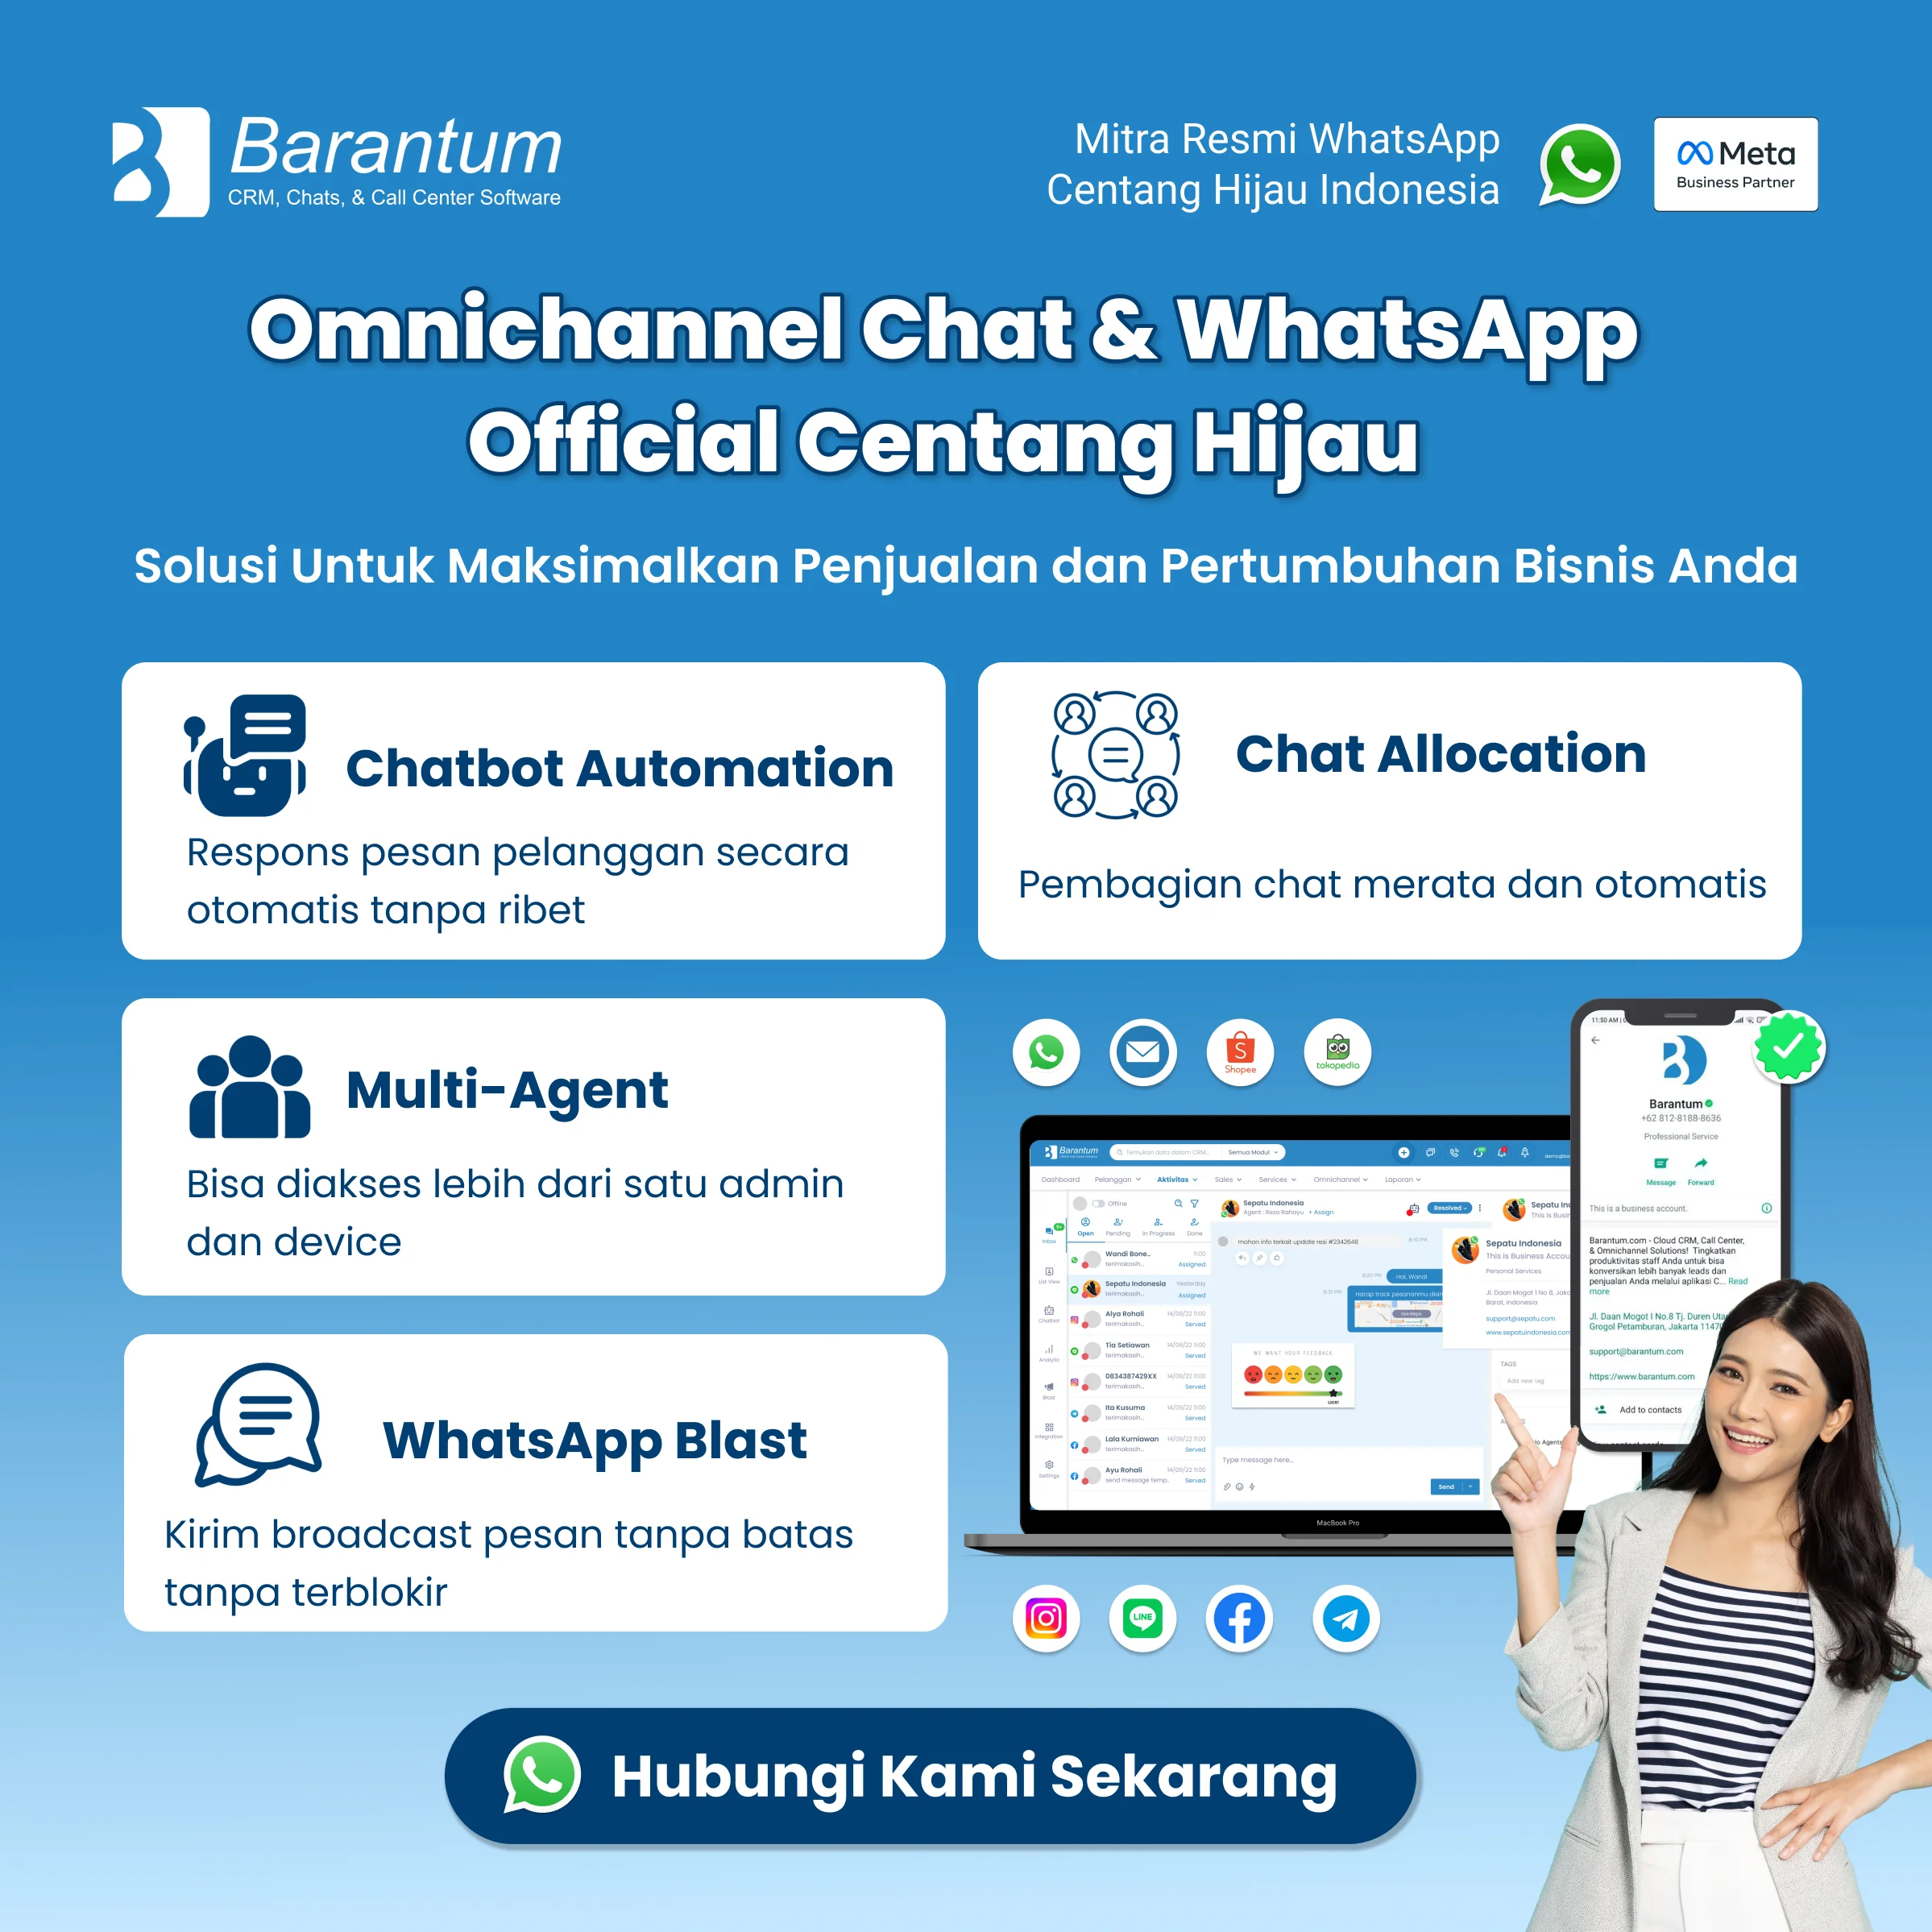 Fitur WhatsApp Official Centang Hijau dan Omnichannel Chat by Barantum